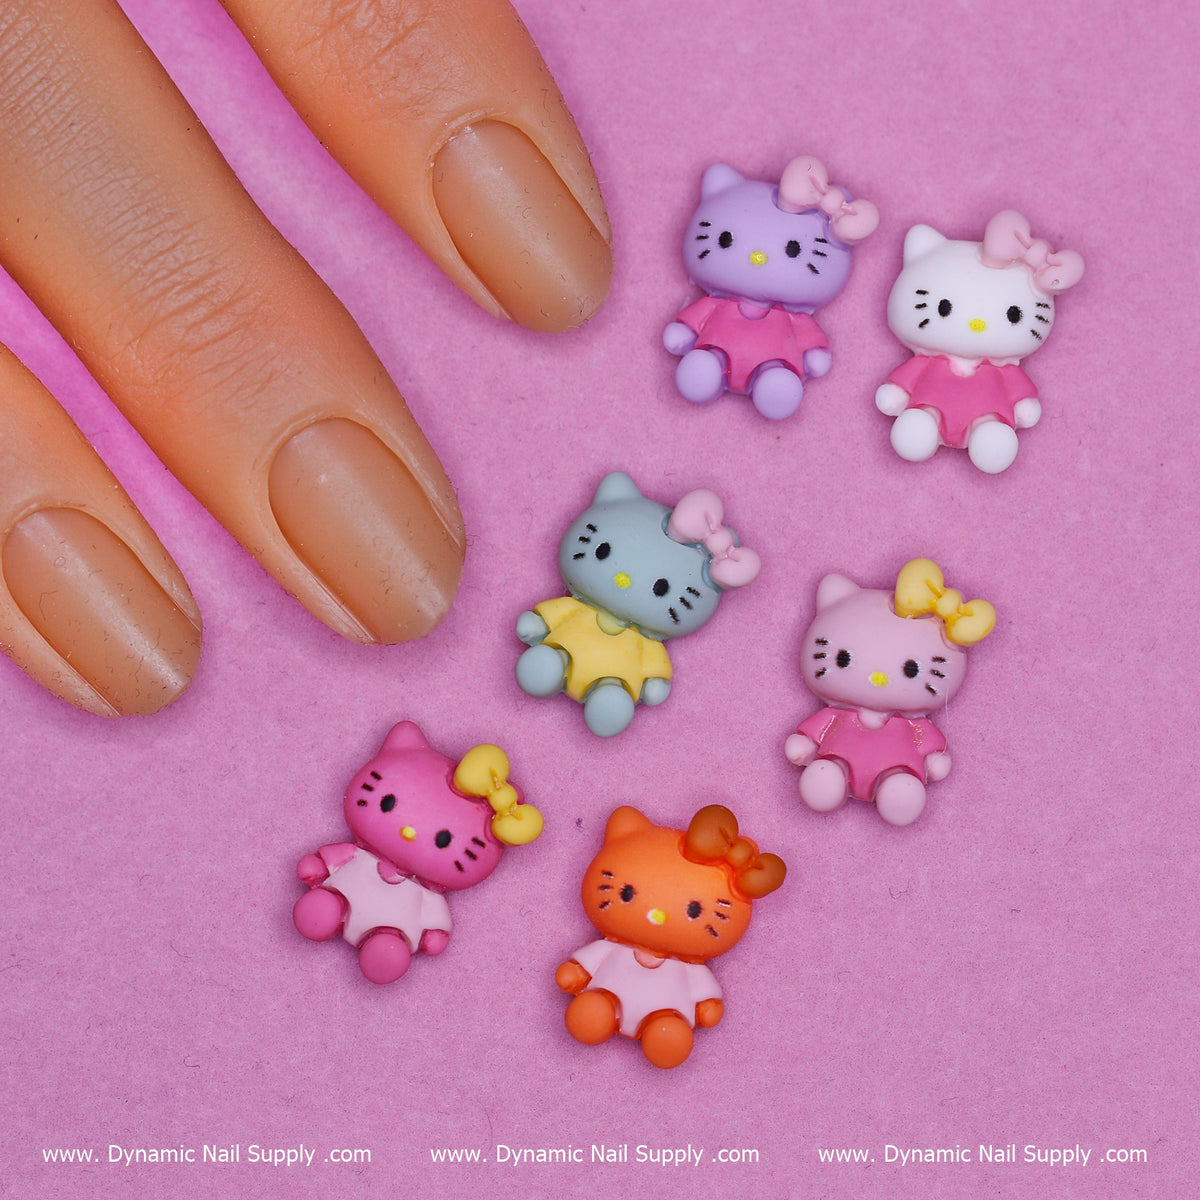 12pcs Hello Kitty Charm set (Cat Logo) Nail Charms for Nails Art Designs